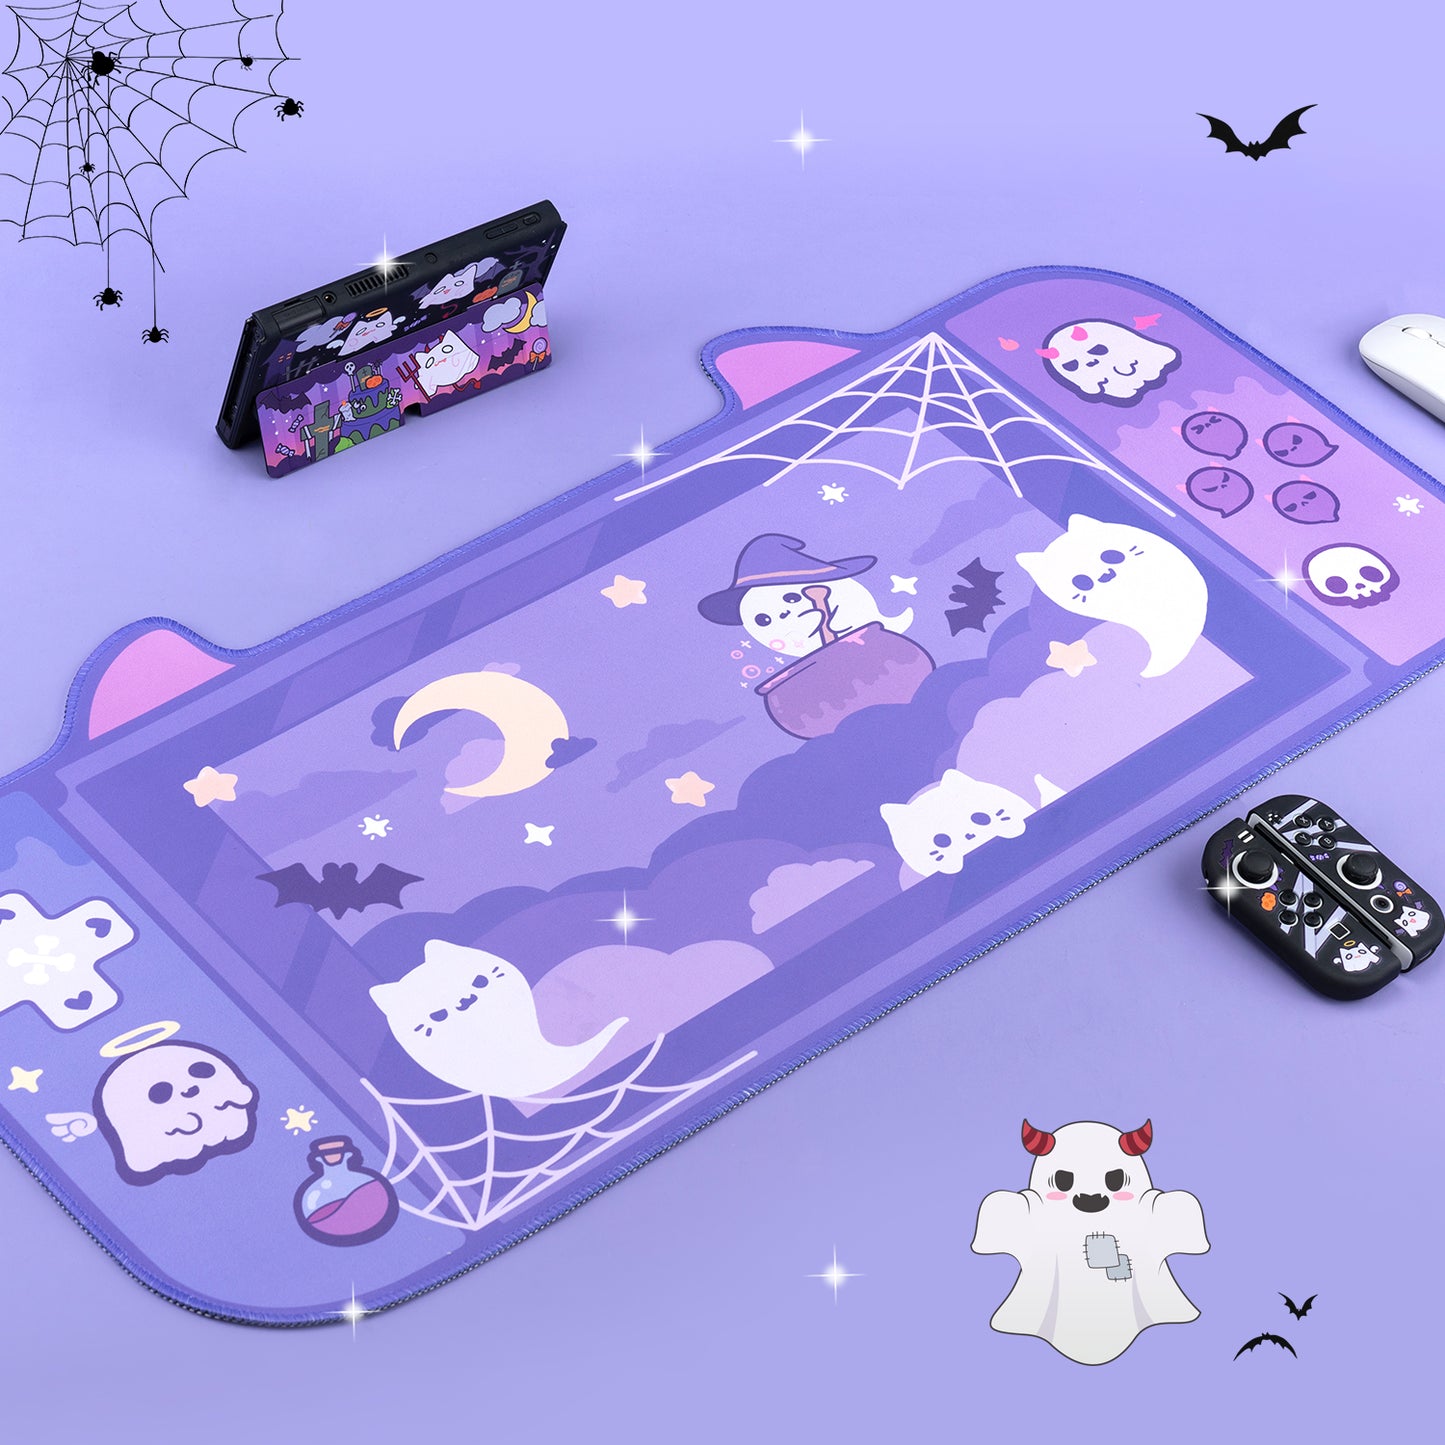 BlingKiyo Halloween Ghost Large Mouse Pad / Desk Mat